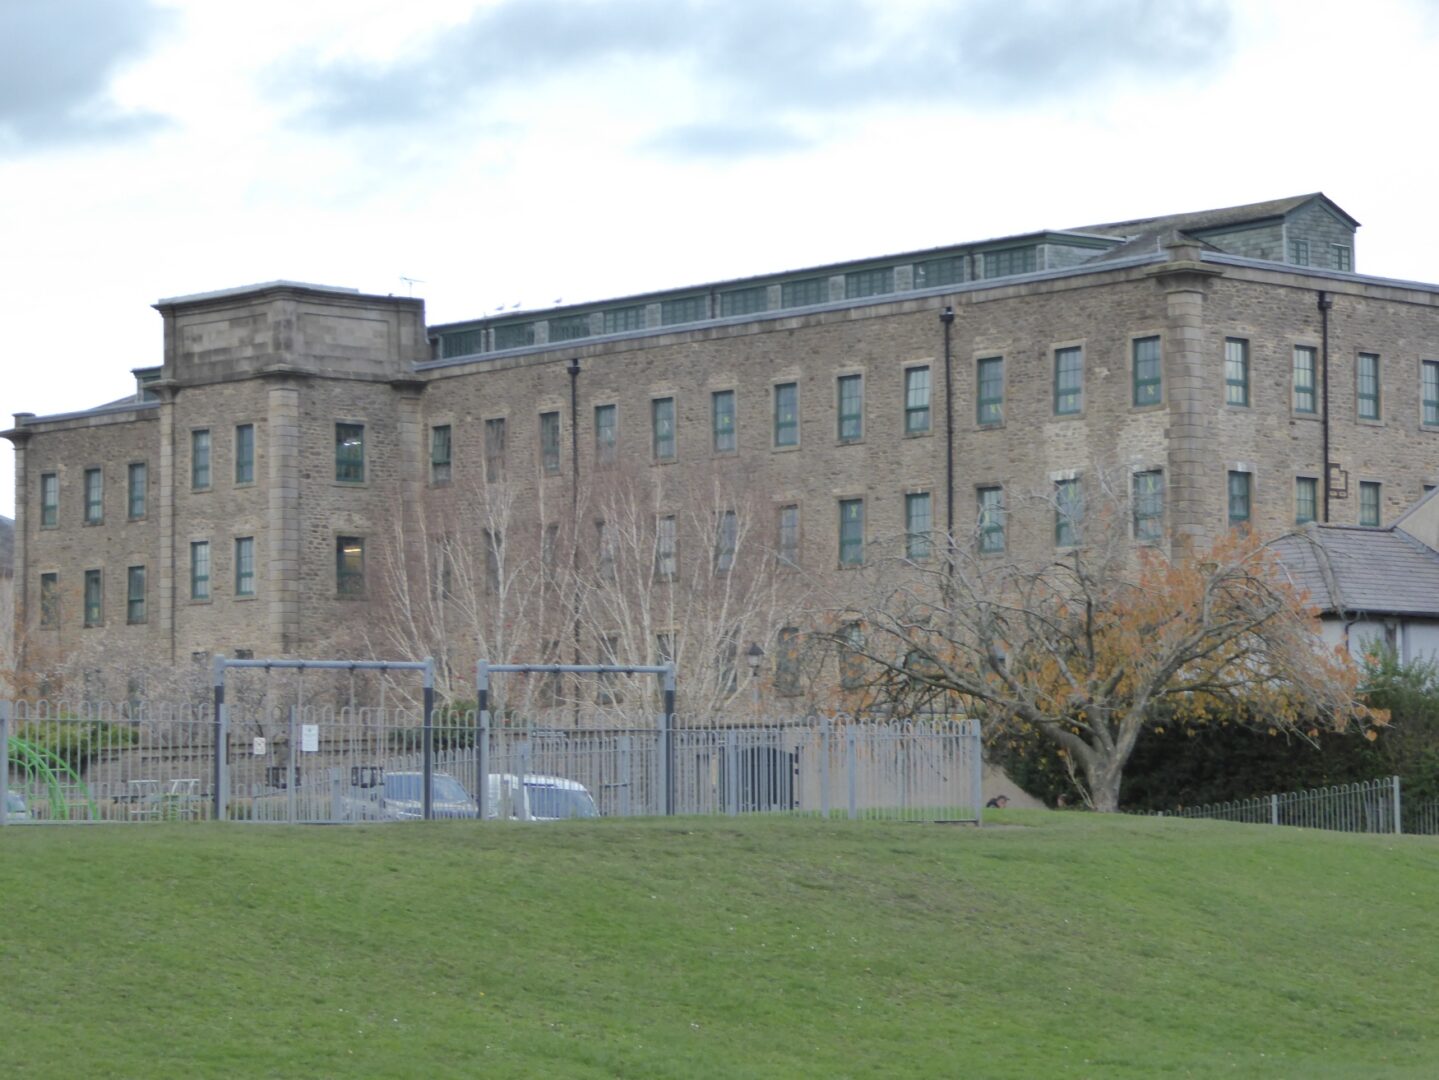 Derwent Mills factory now flats